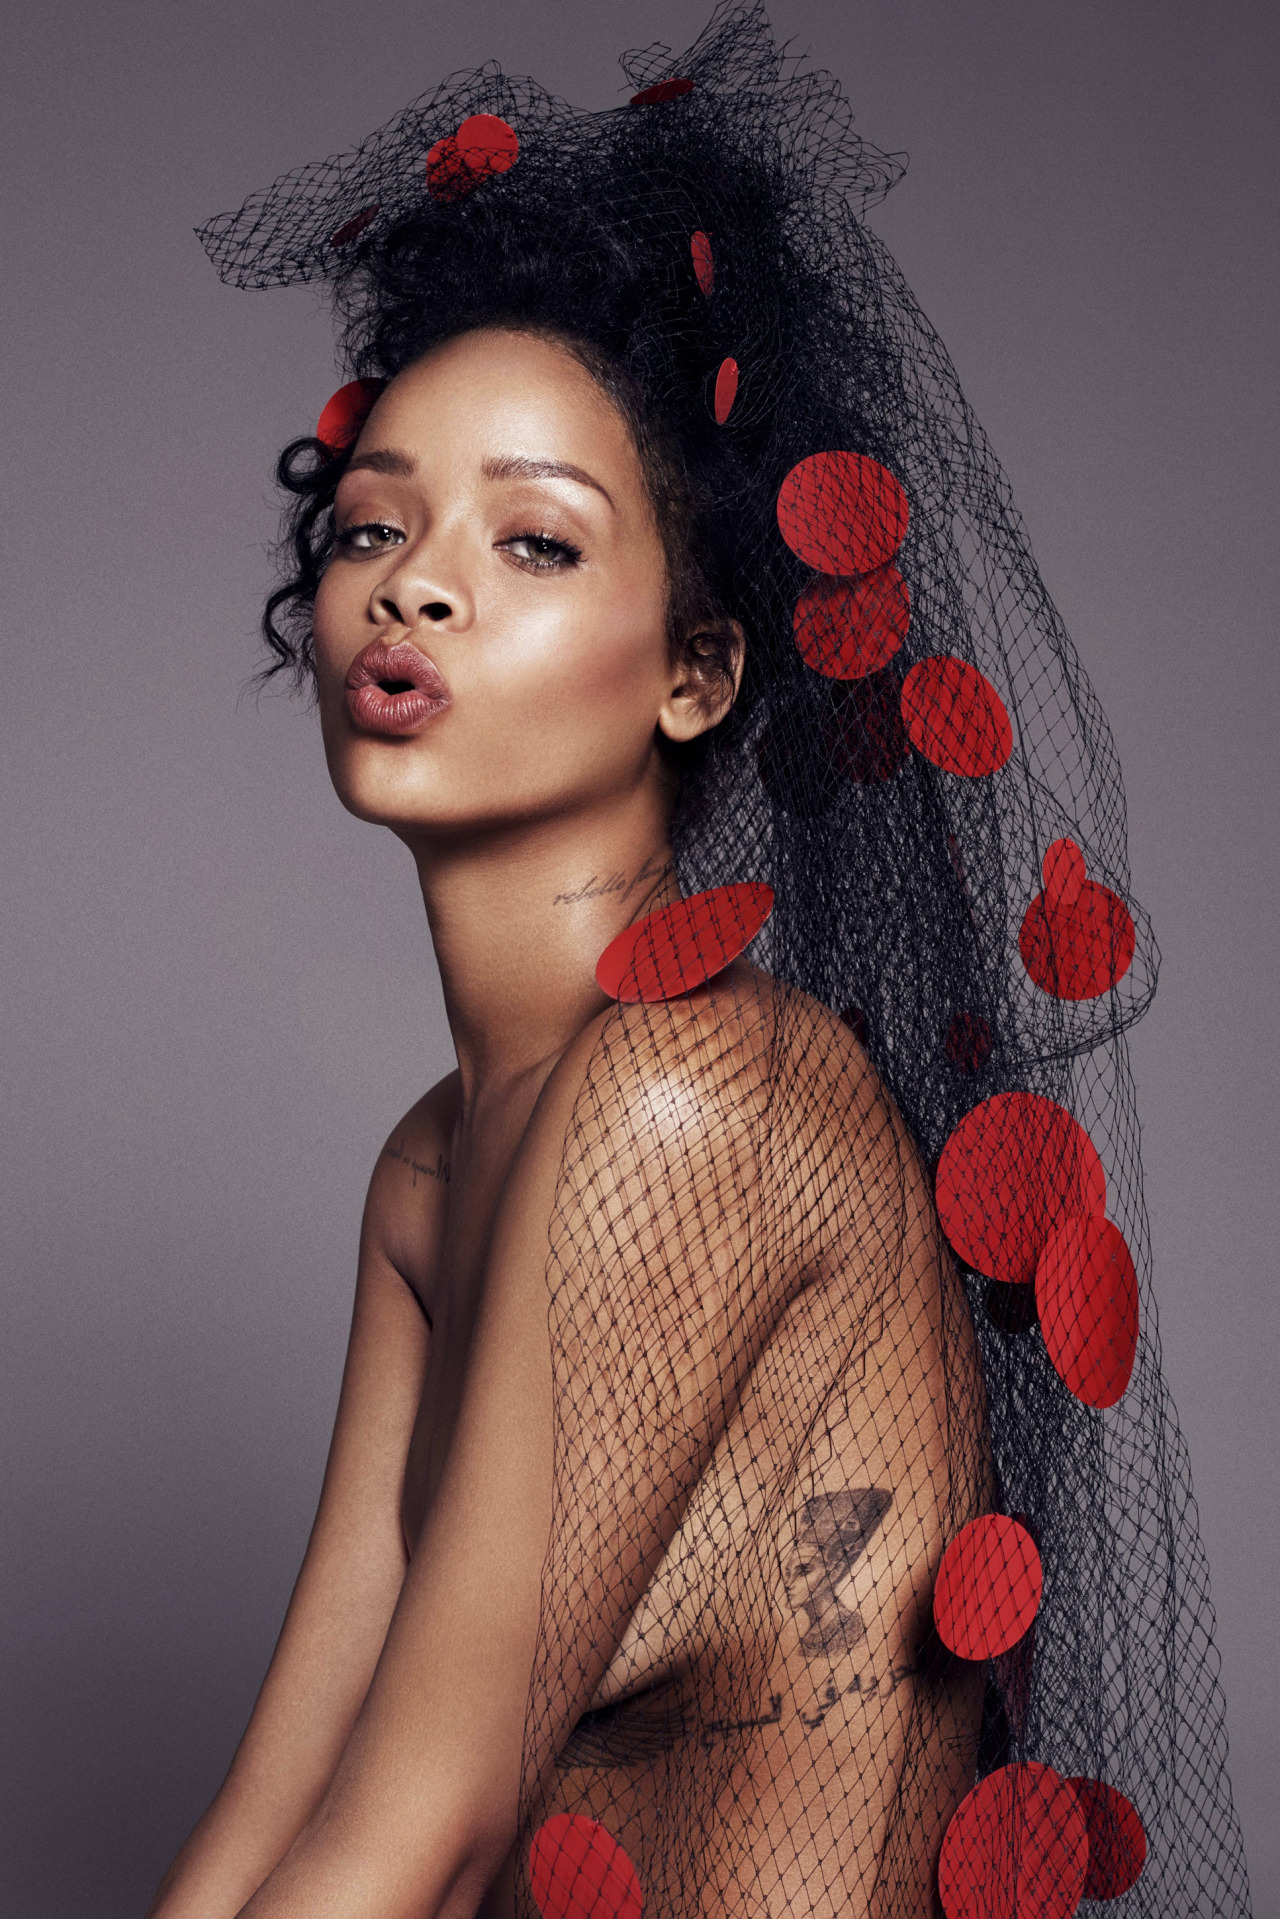  Rihanna for Elle Magazine #1 